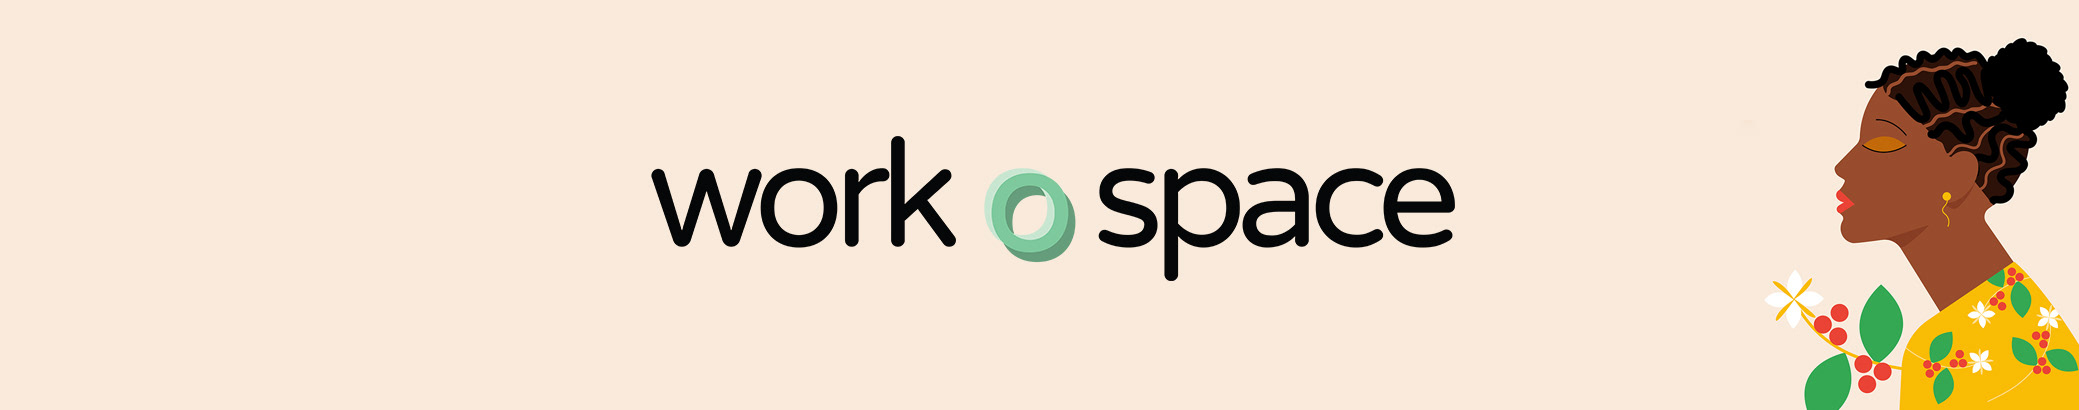 Workospace India's profile banner